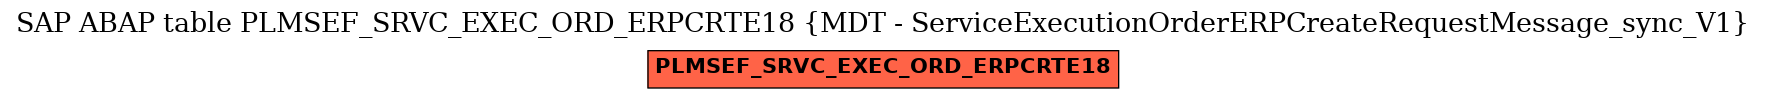 E-R Diagram for table PLMSEF_SRVC_EXEC_ORD_ERPCRTE18 (MDT - ServiceExecutionOrderERPCreateRequestMessage_sync_V1)